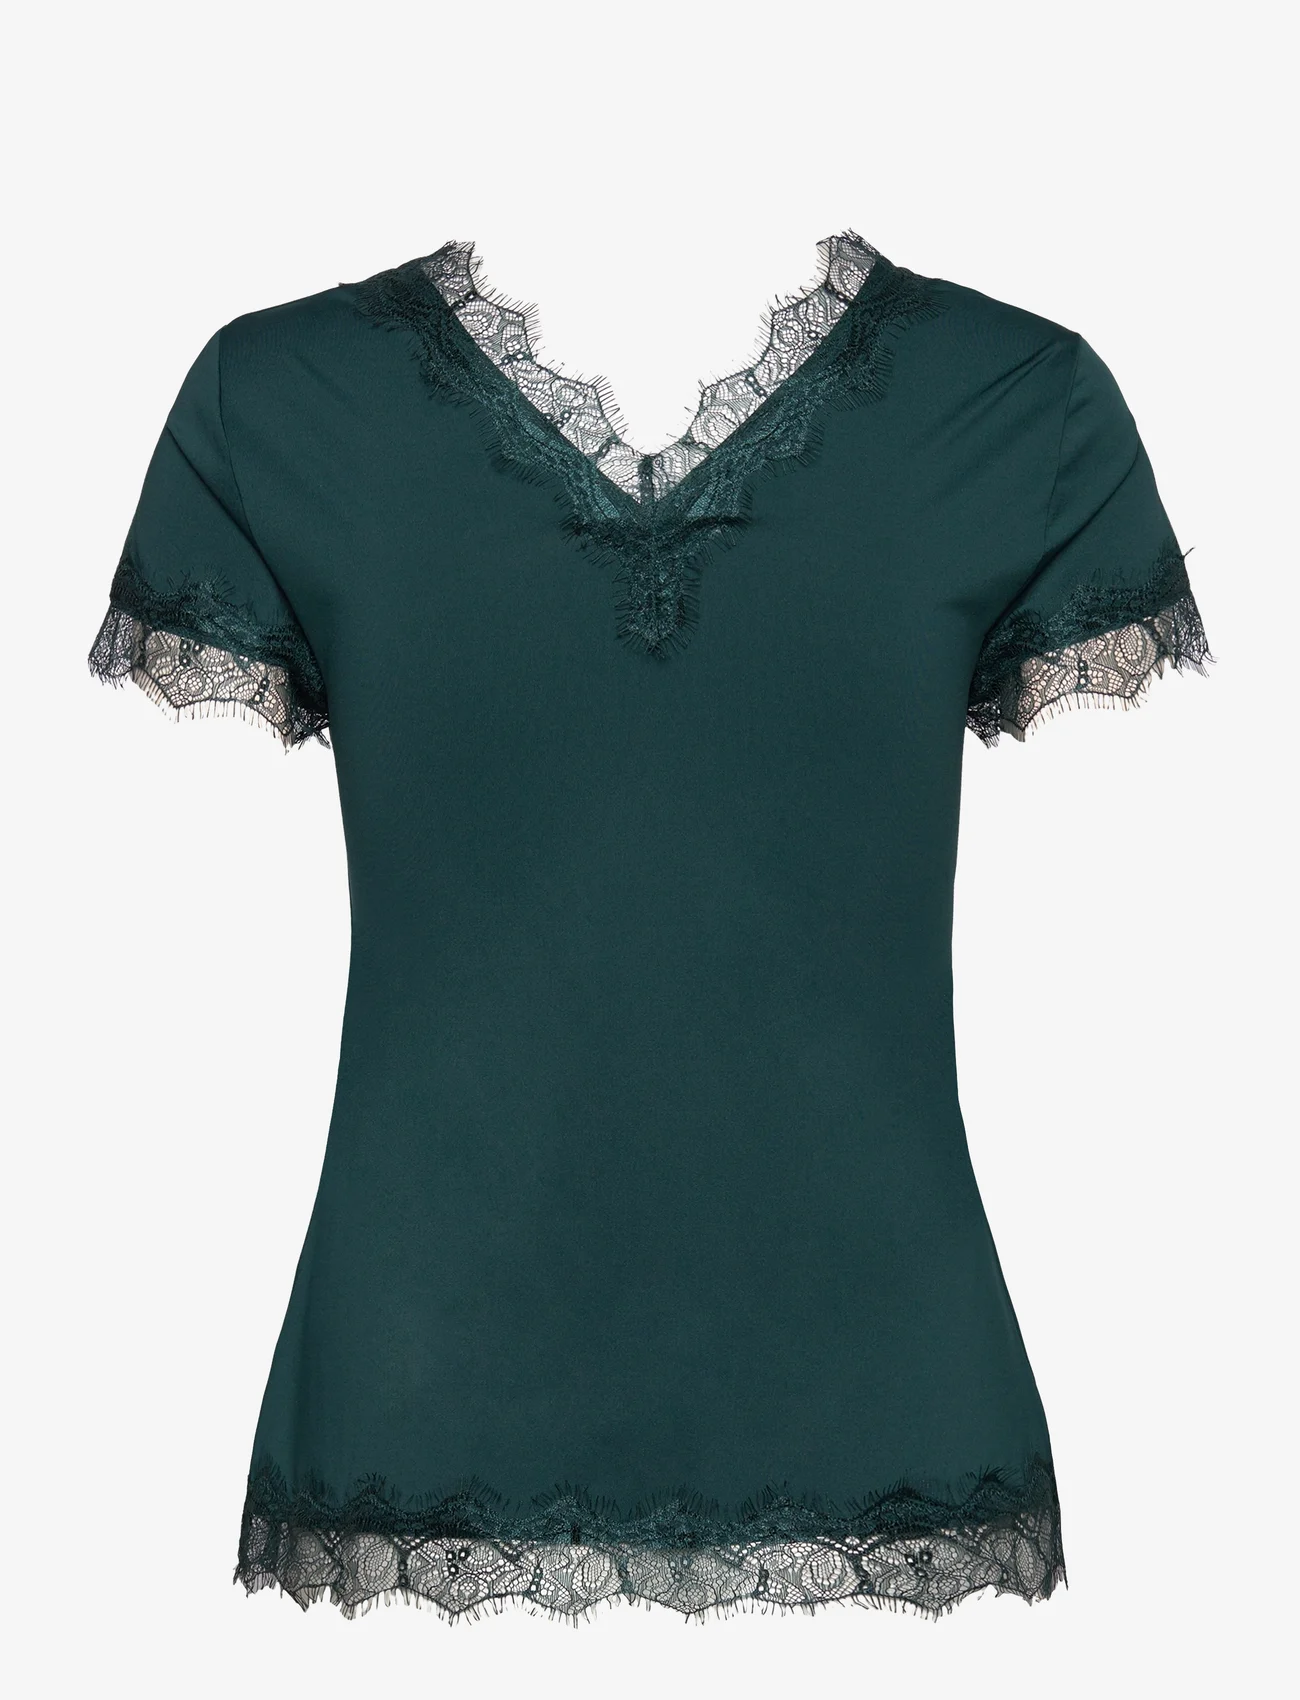 Rosemunde - T-shirt - bluzki z krótkim rękawem - dark teal - 1